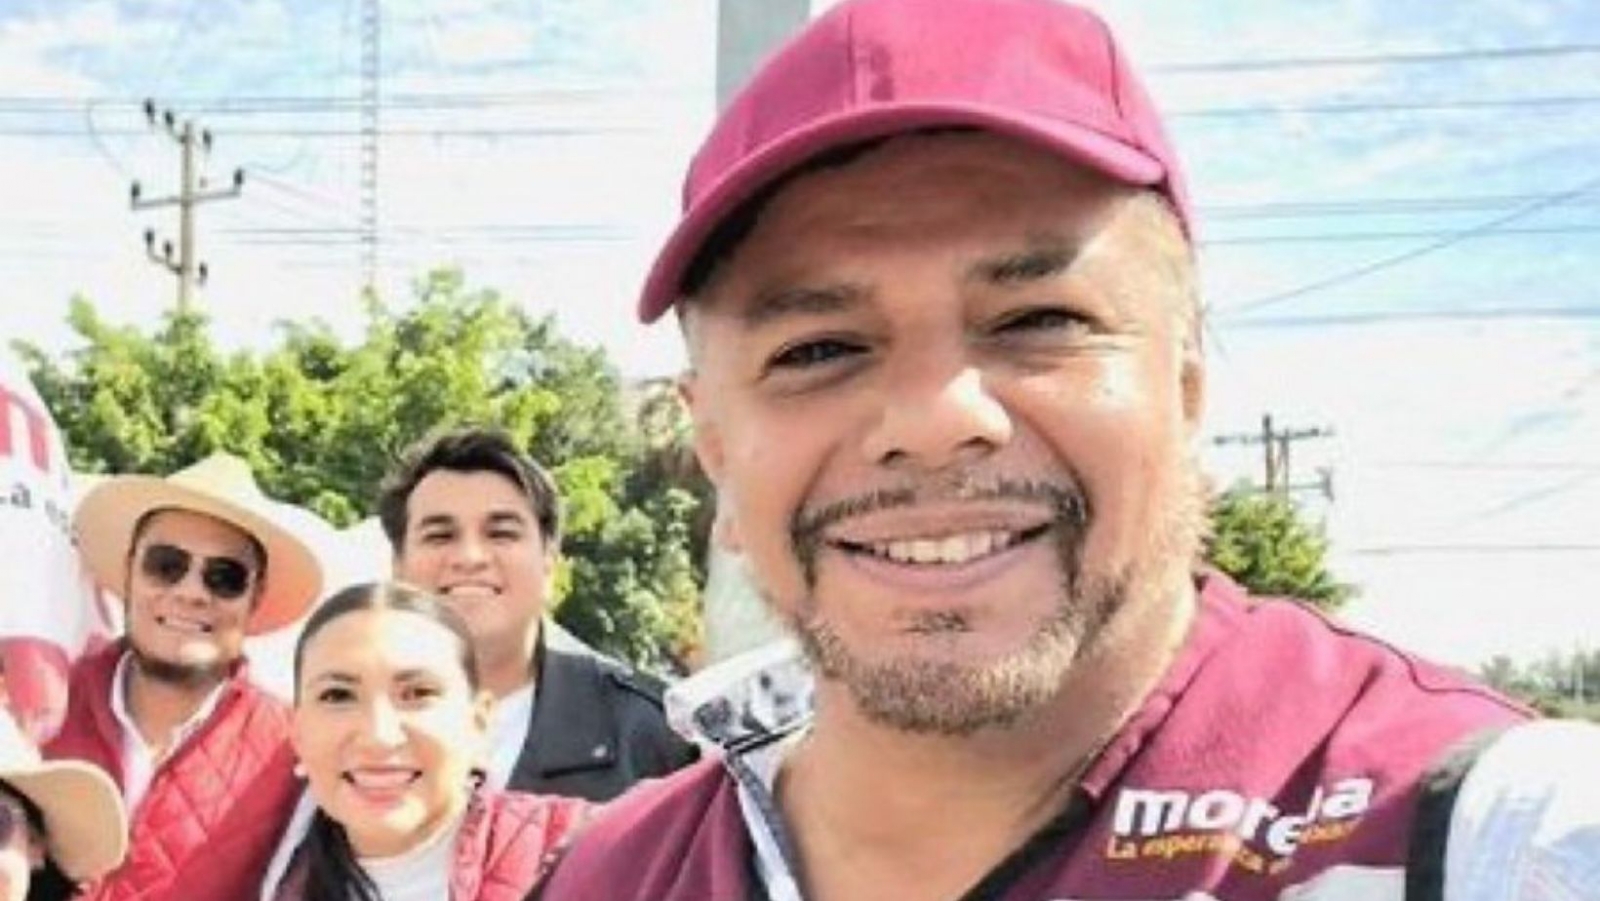 'No falleció': Reportan como desaparecido a Adrián Guerrero Caracheo, candidato a Regidor de Celaya